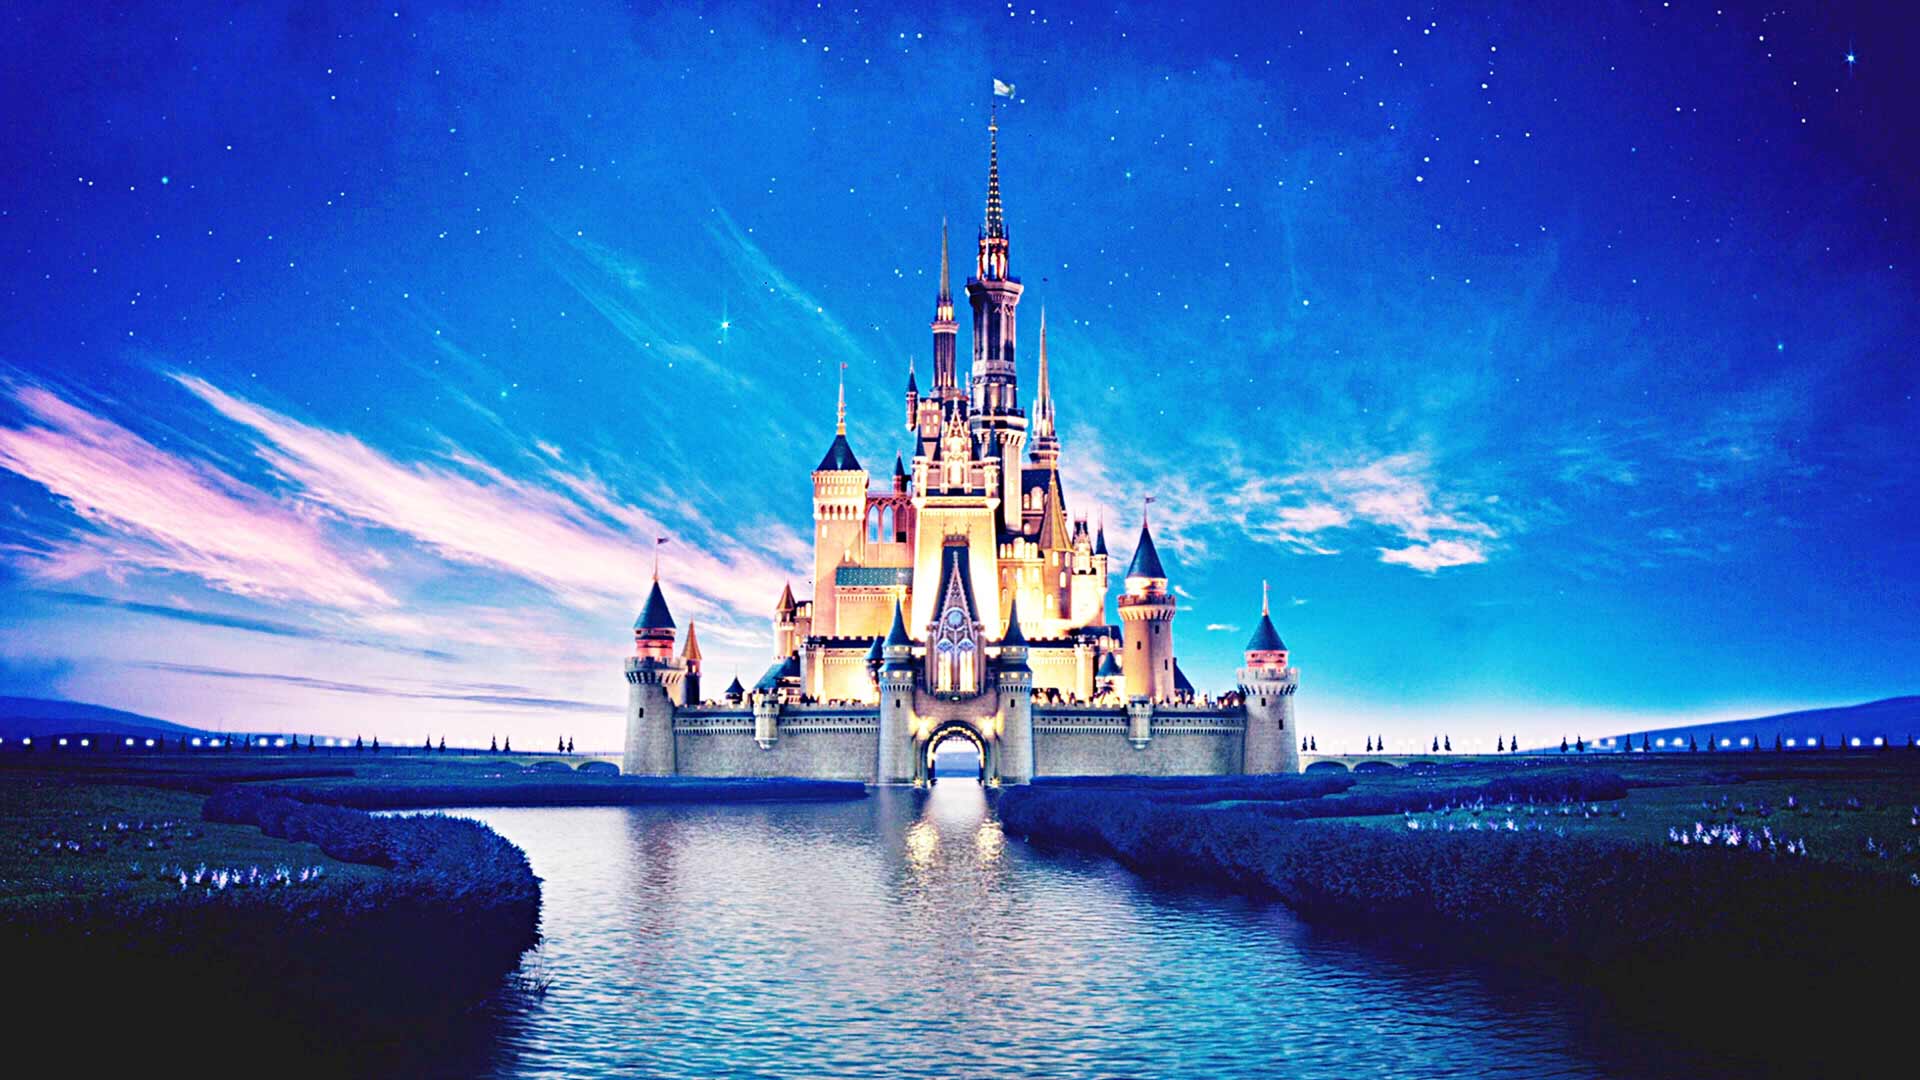 Or Widescreen Resolution Disney Castle Wallpaper